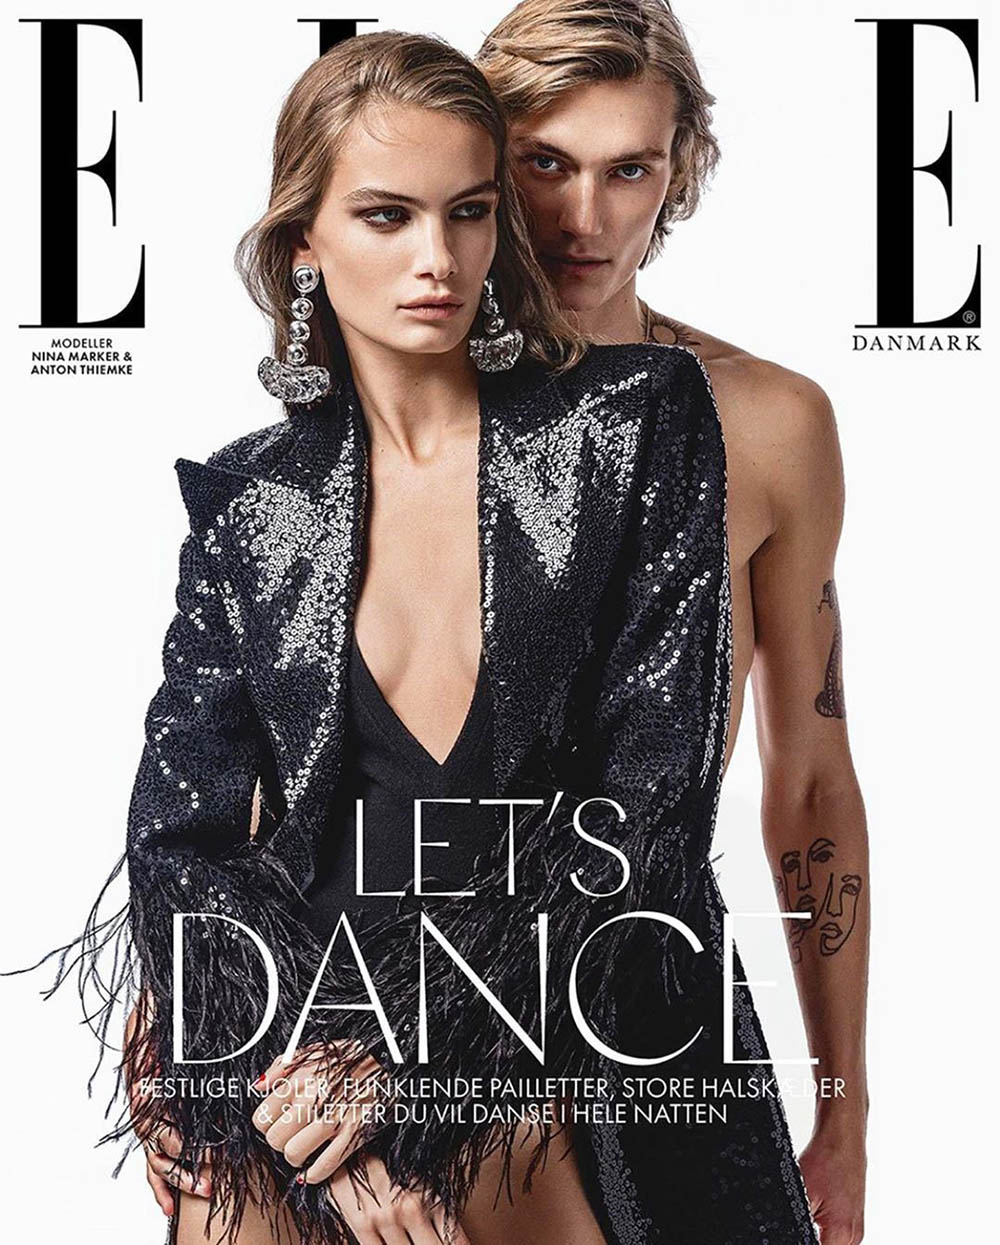 Nina Marker and Anton Thiemke cover Elle Denmark November 2019 by Marco van Rijt